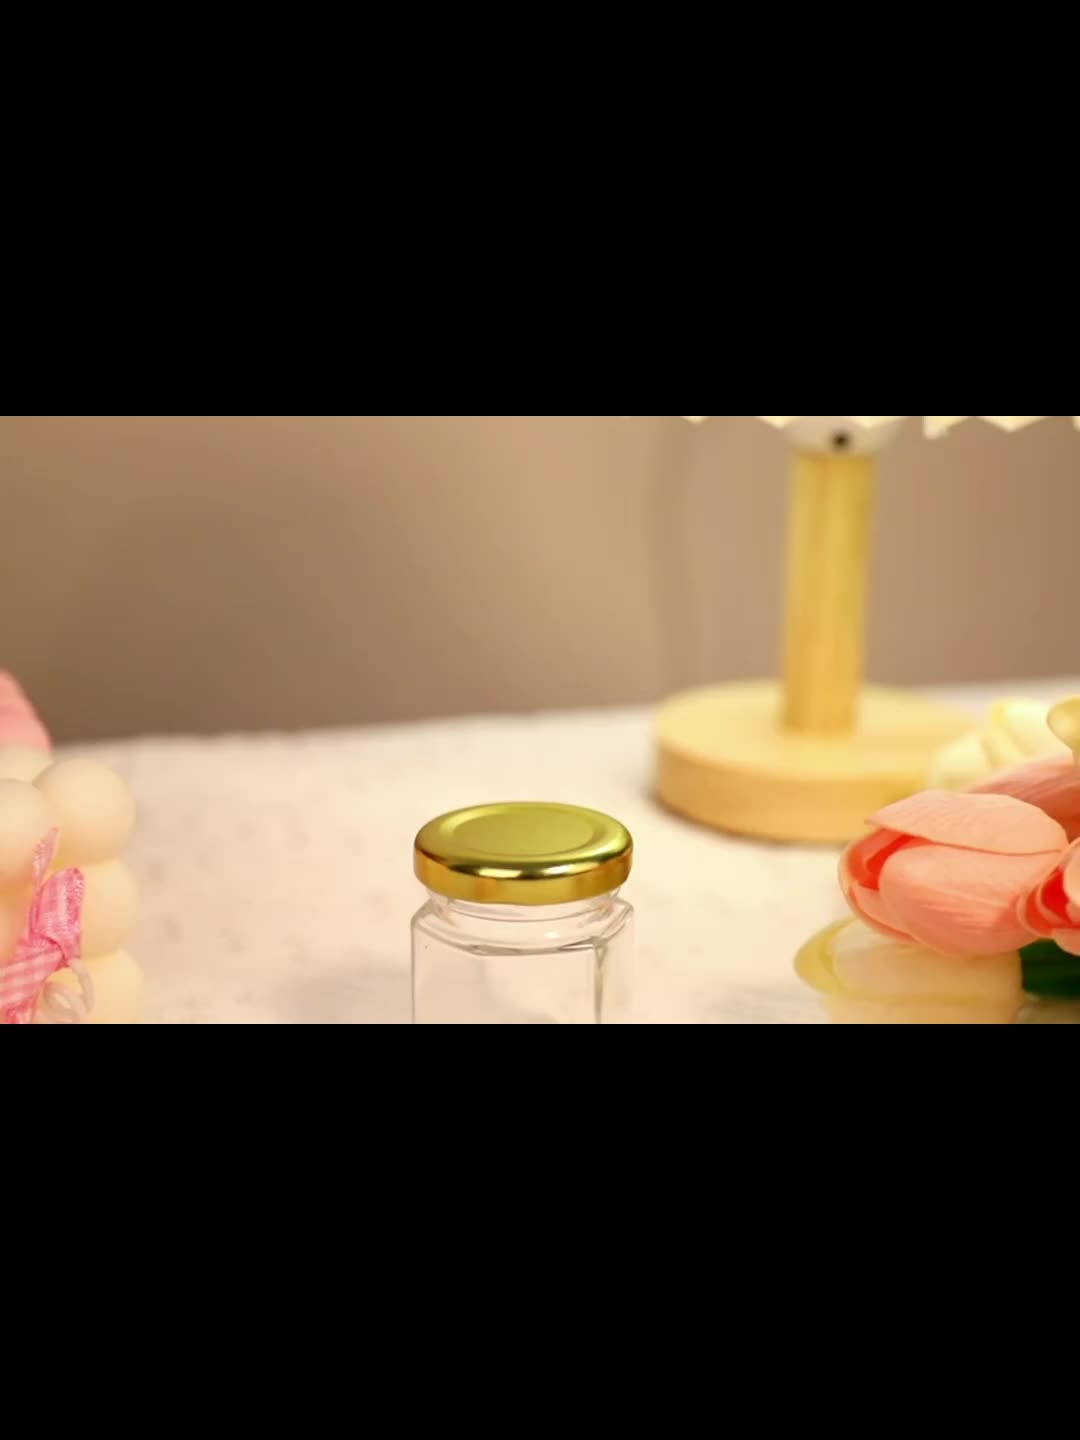  XING-RUIYANG Mini tarros de miel, con cuchara de madera, tarros  hexagonales de vidrio de 1.5 onzas con tapas doradas, colgantes de abeja  dorada, yute decorativo para bodas, pequeñas etiquetas : Hogar